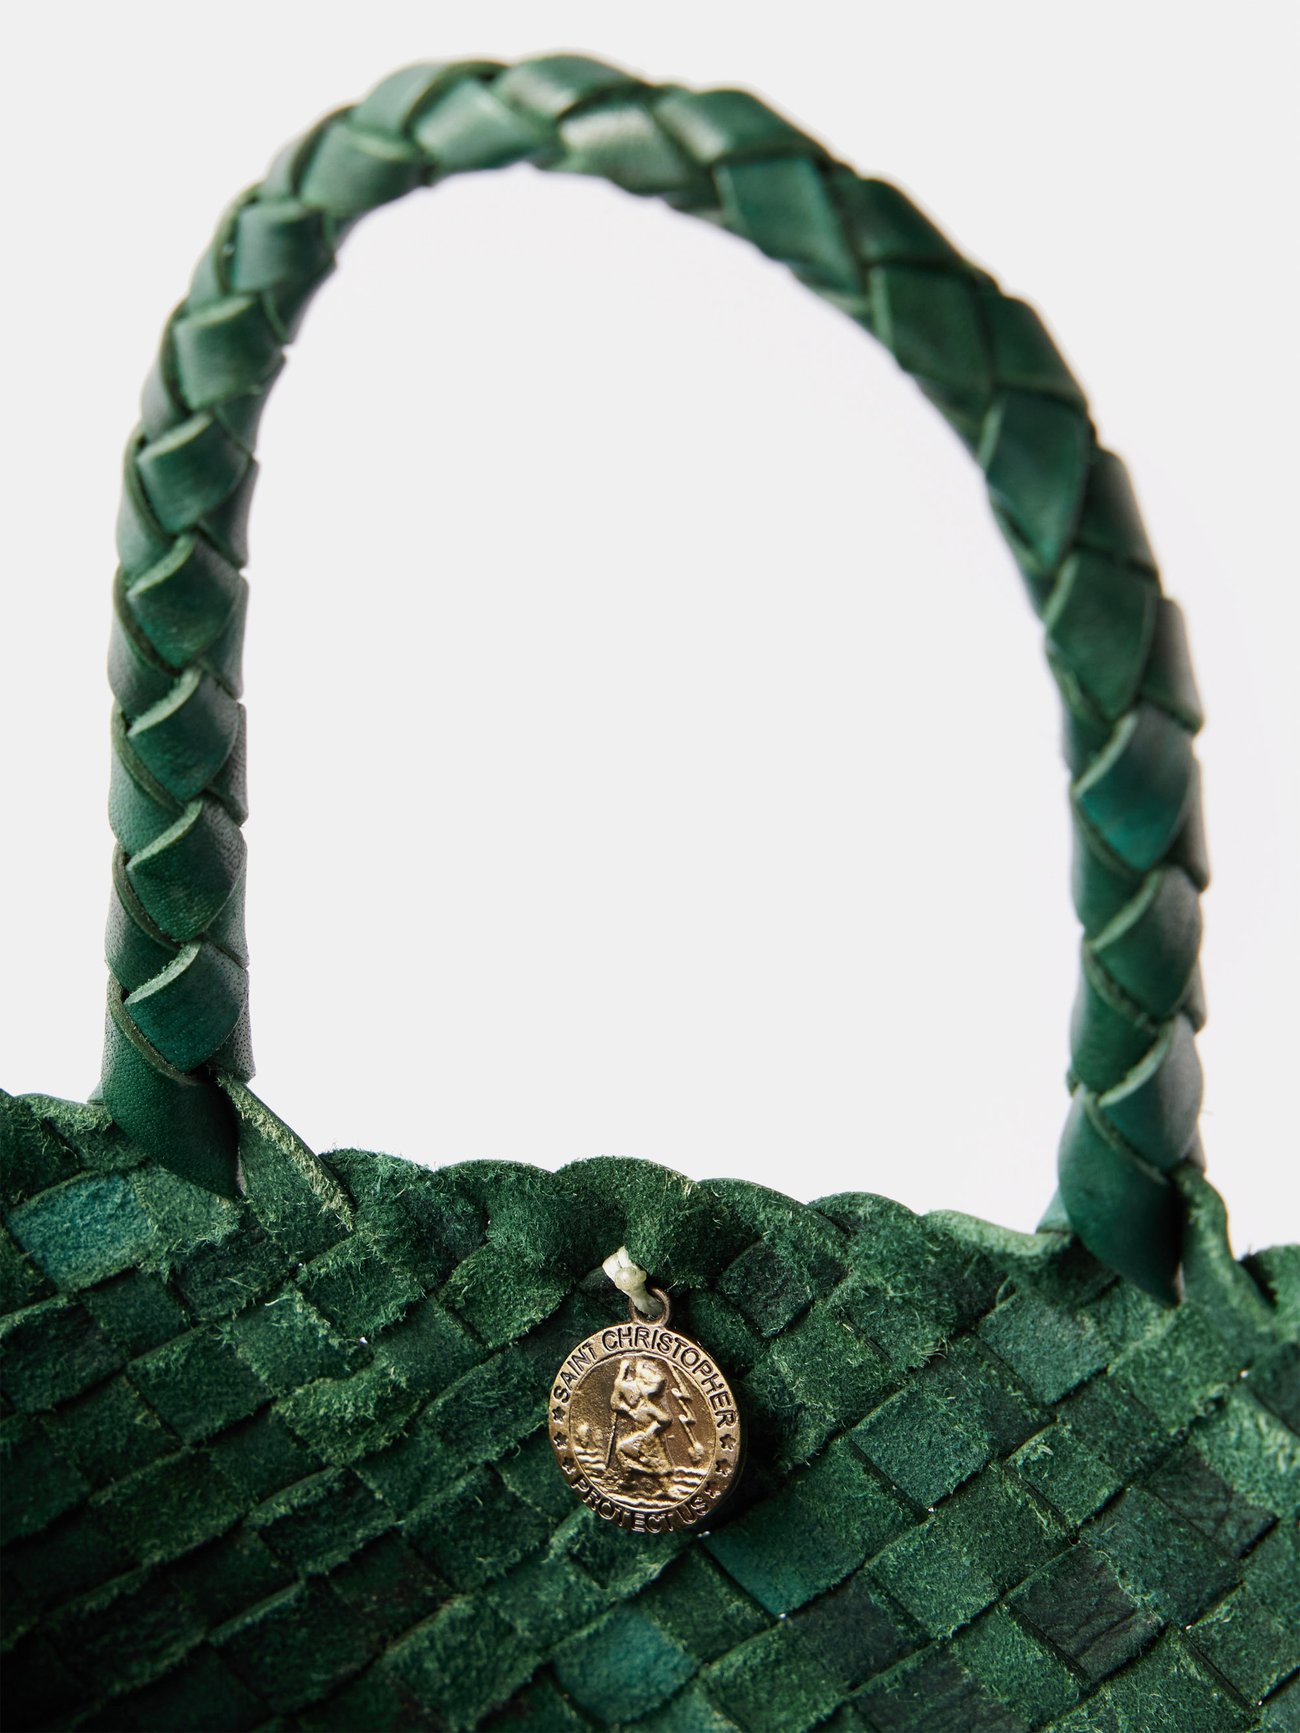 Dragon Diffusion - Santa Croce Small Red Woven Leather Bag